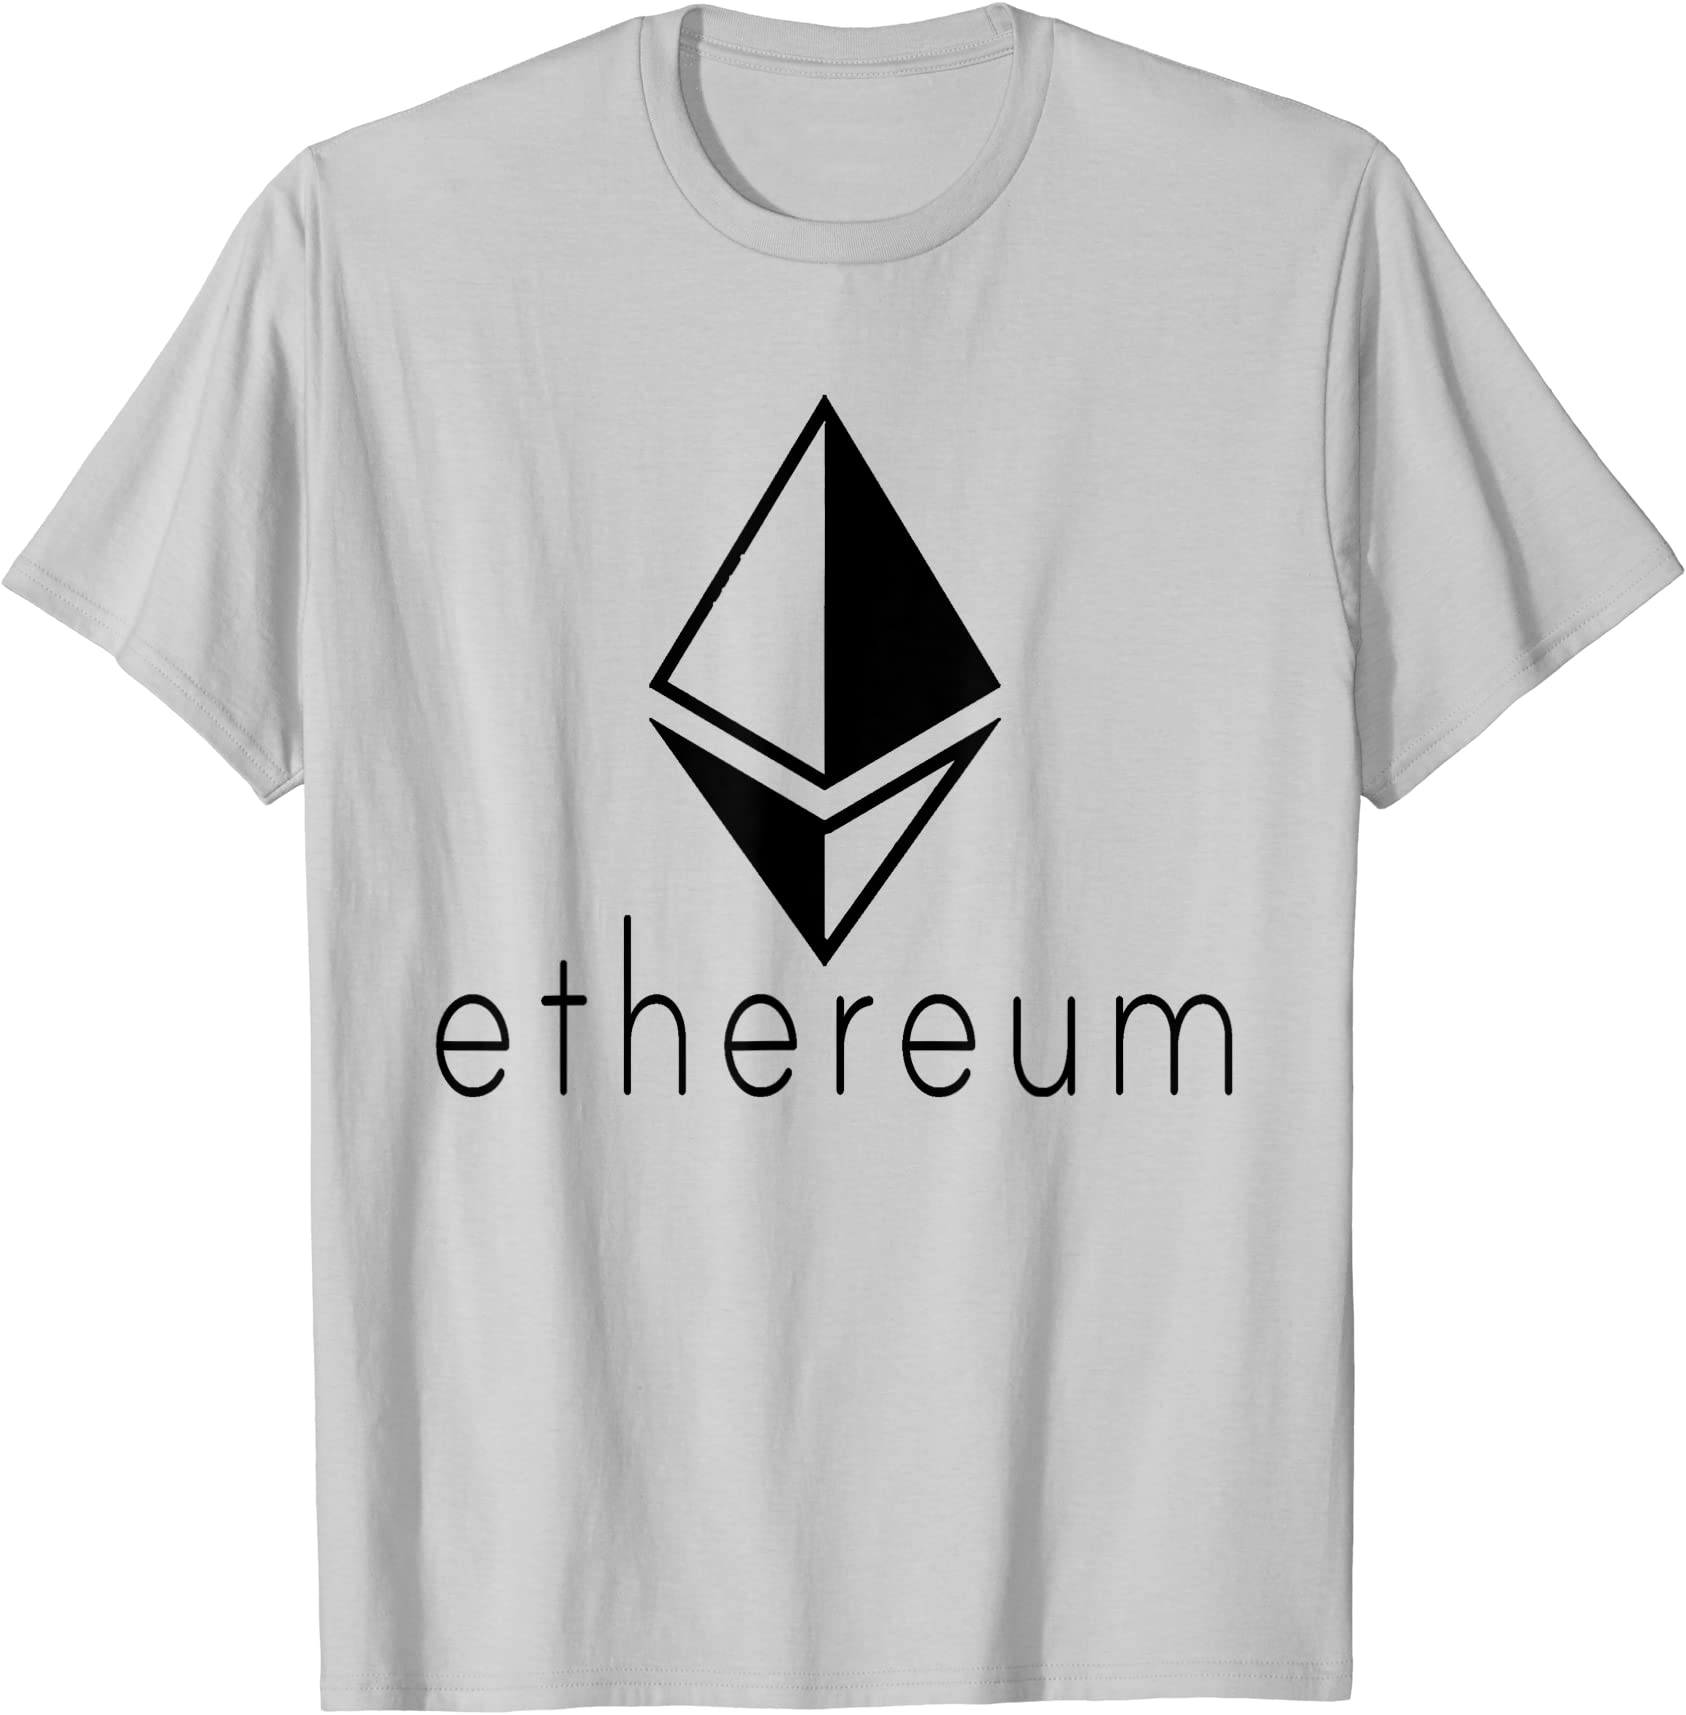 ethereum original logo orange eth tshirt men - Buy t-shirt designs